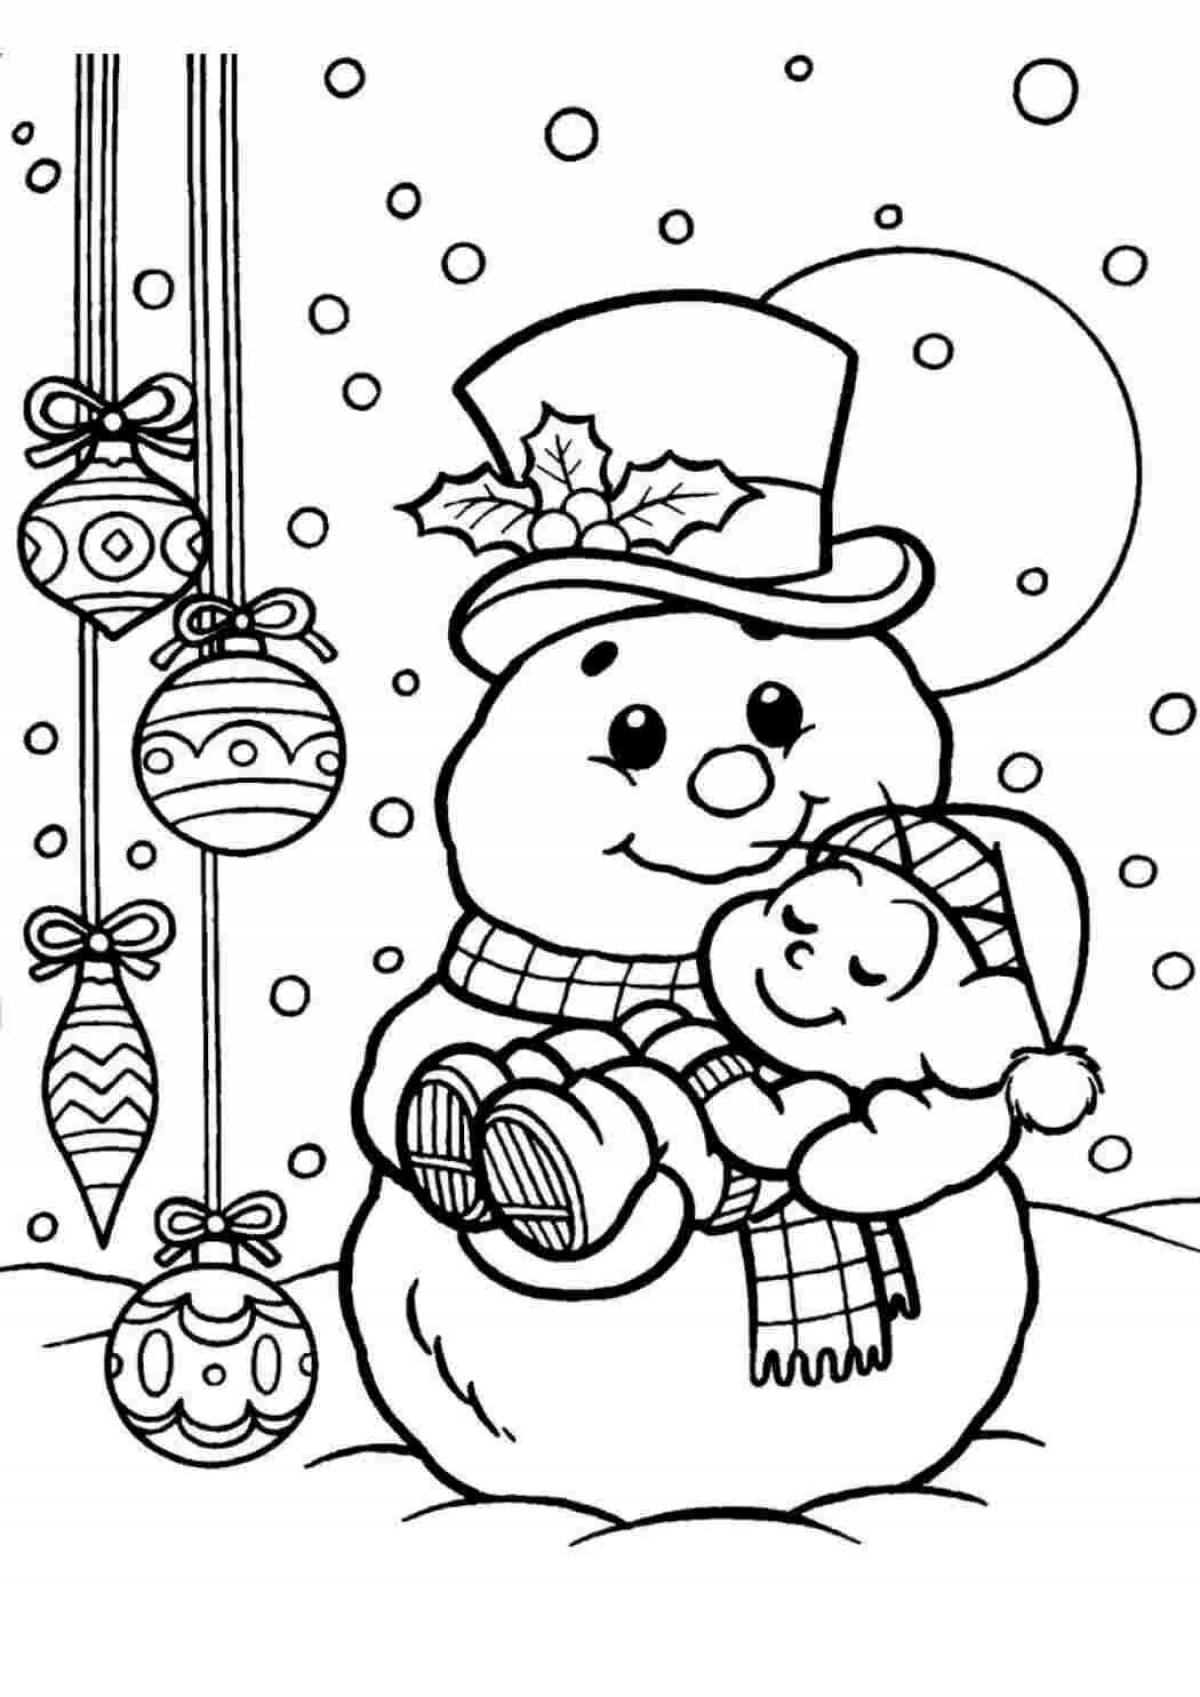 Exquisite snowman coloring card